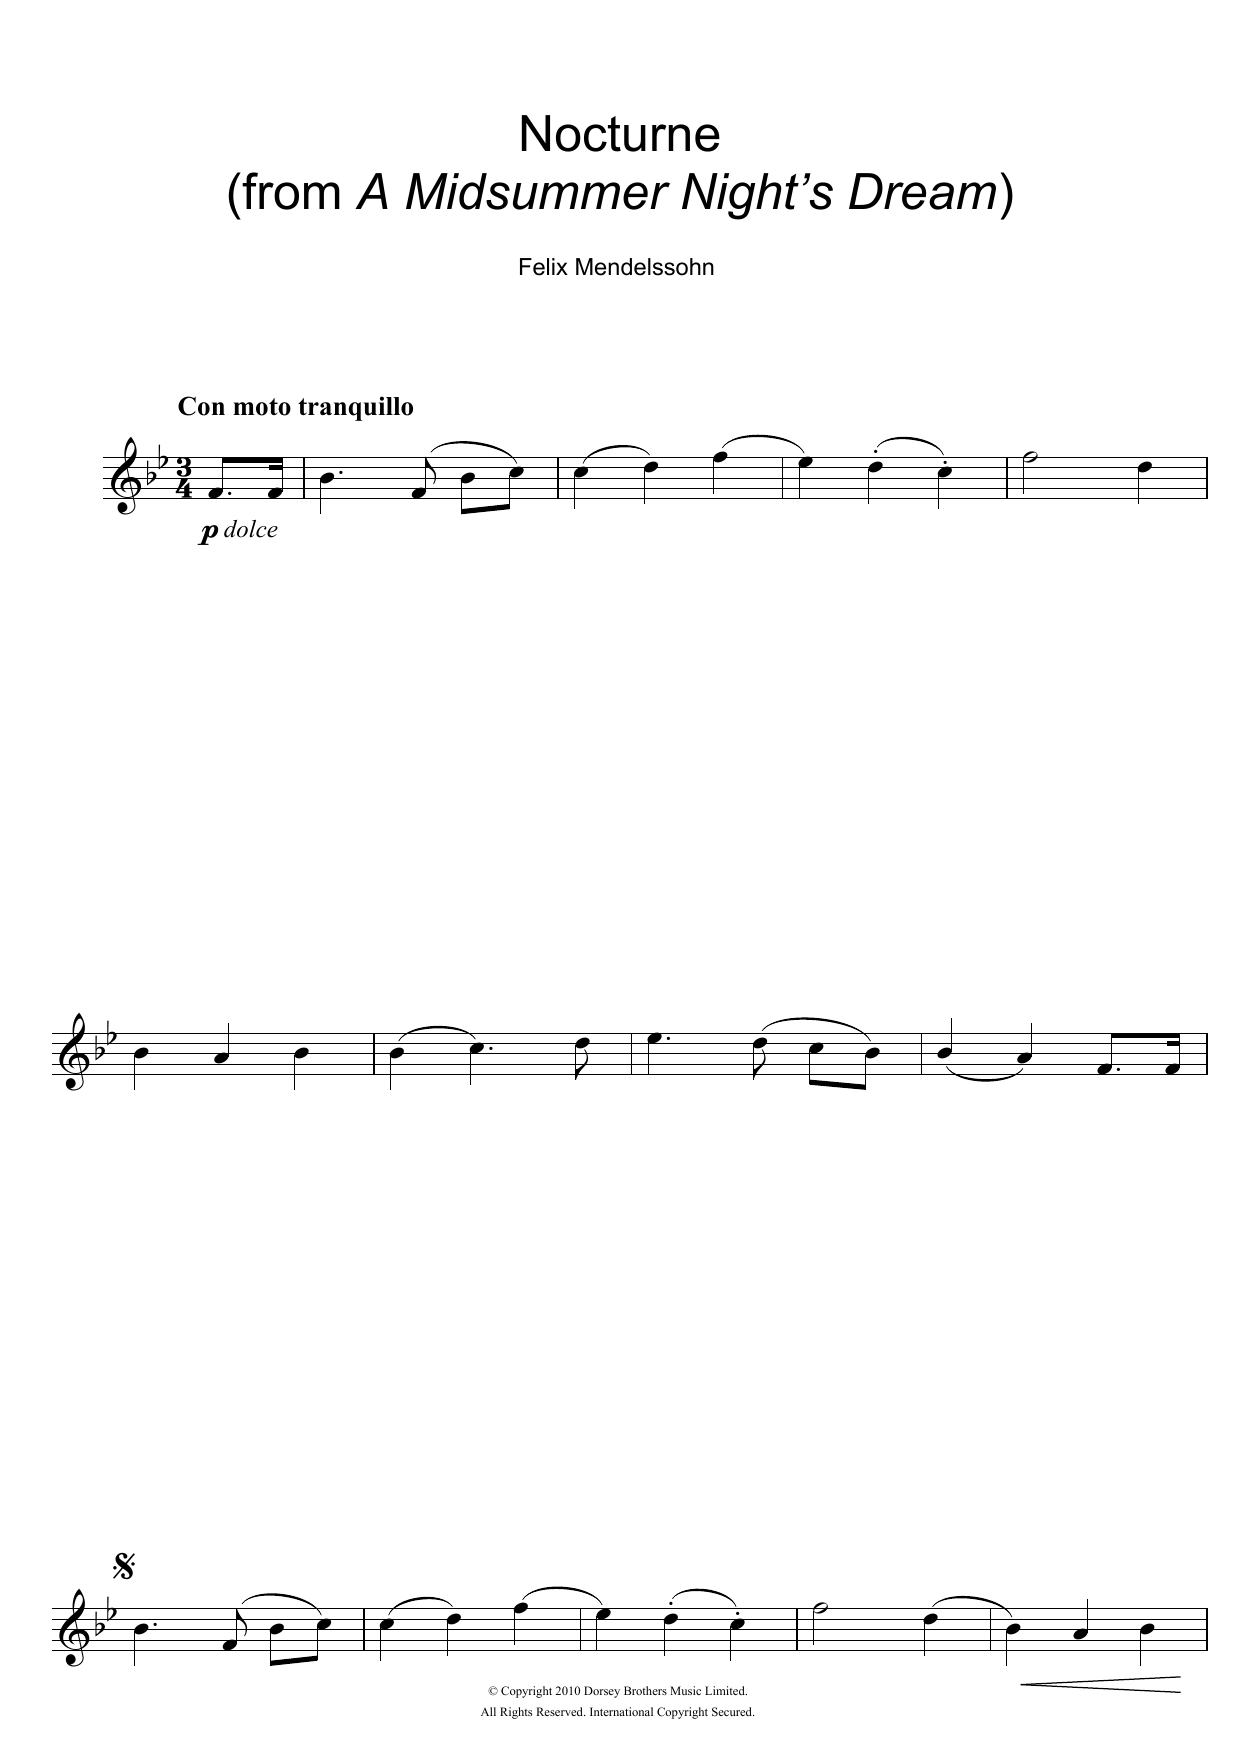 Felix Mendelssohn Nocturne (from A Midsummer Night's Dream) Sheet Music Notes & Chords for Flute - Download or Print PDF